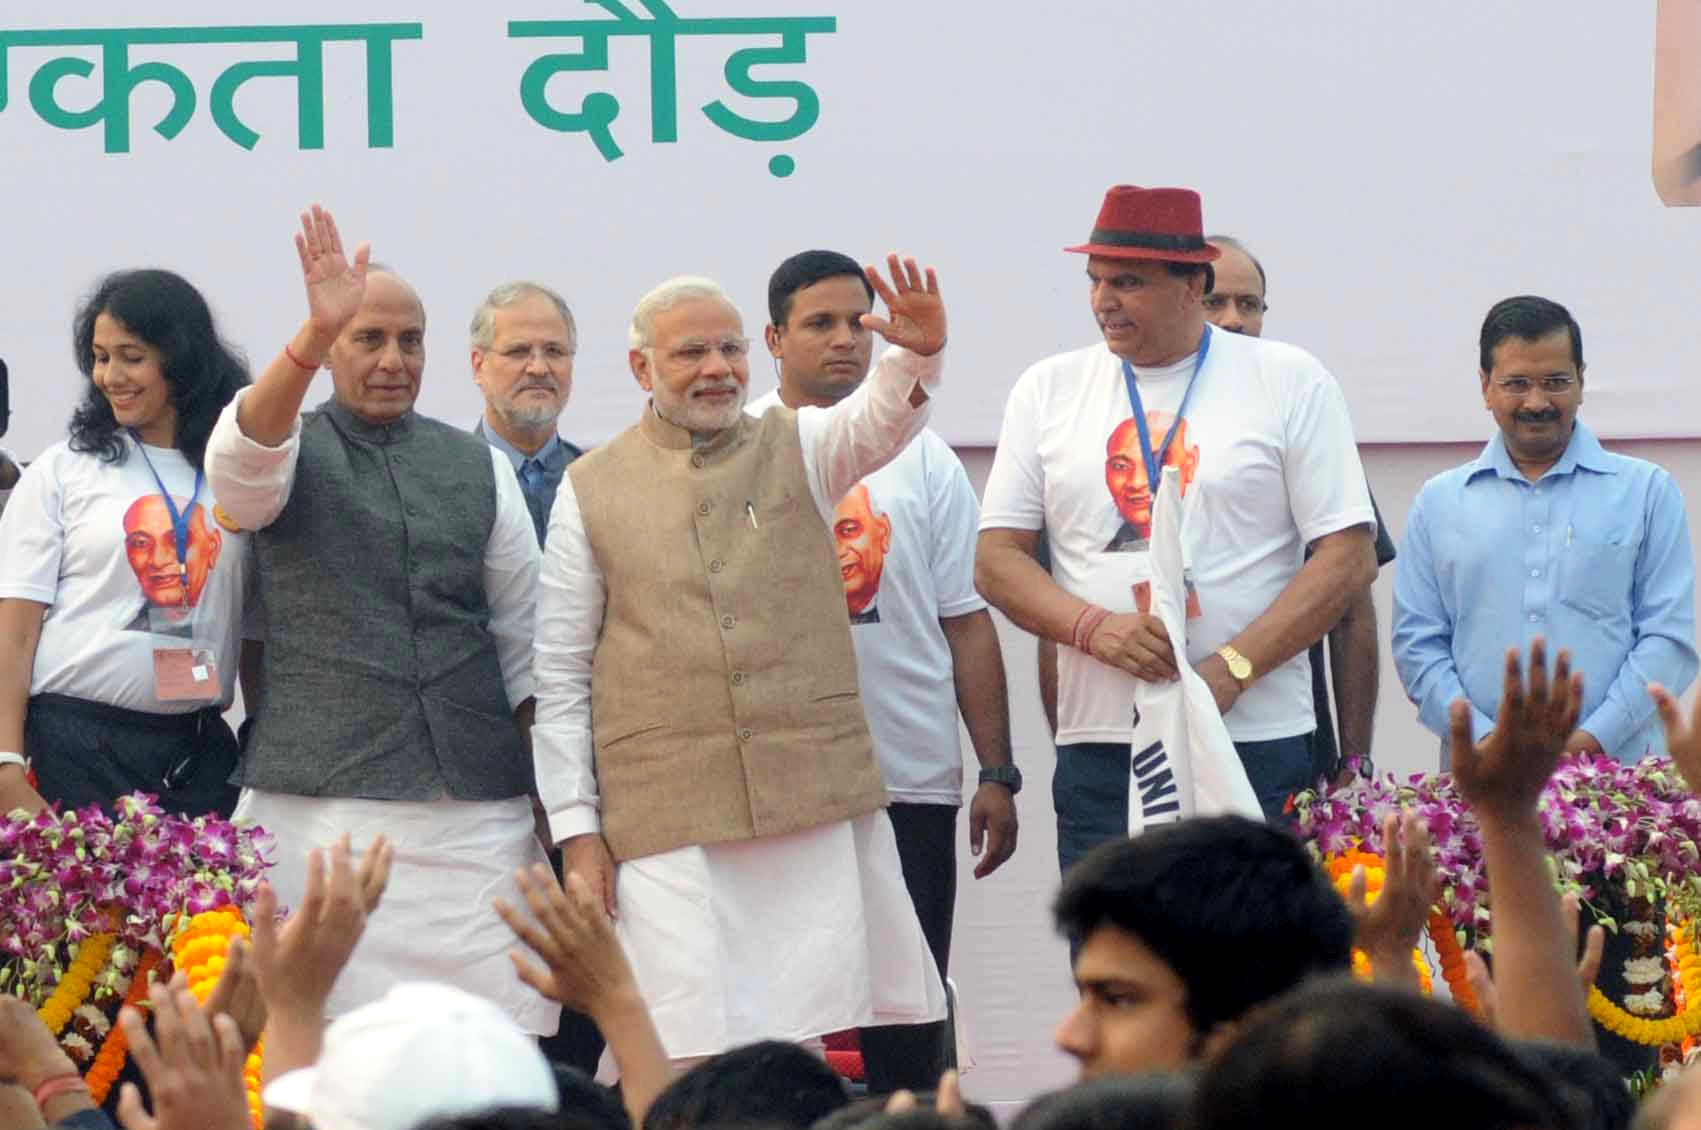 The Prime Minister, Shri Narendra Modi flagging off the Run for Unity on Rashtriya Ekta Diwas, at Rajpath, in New Delhi on October 31, 2015.